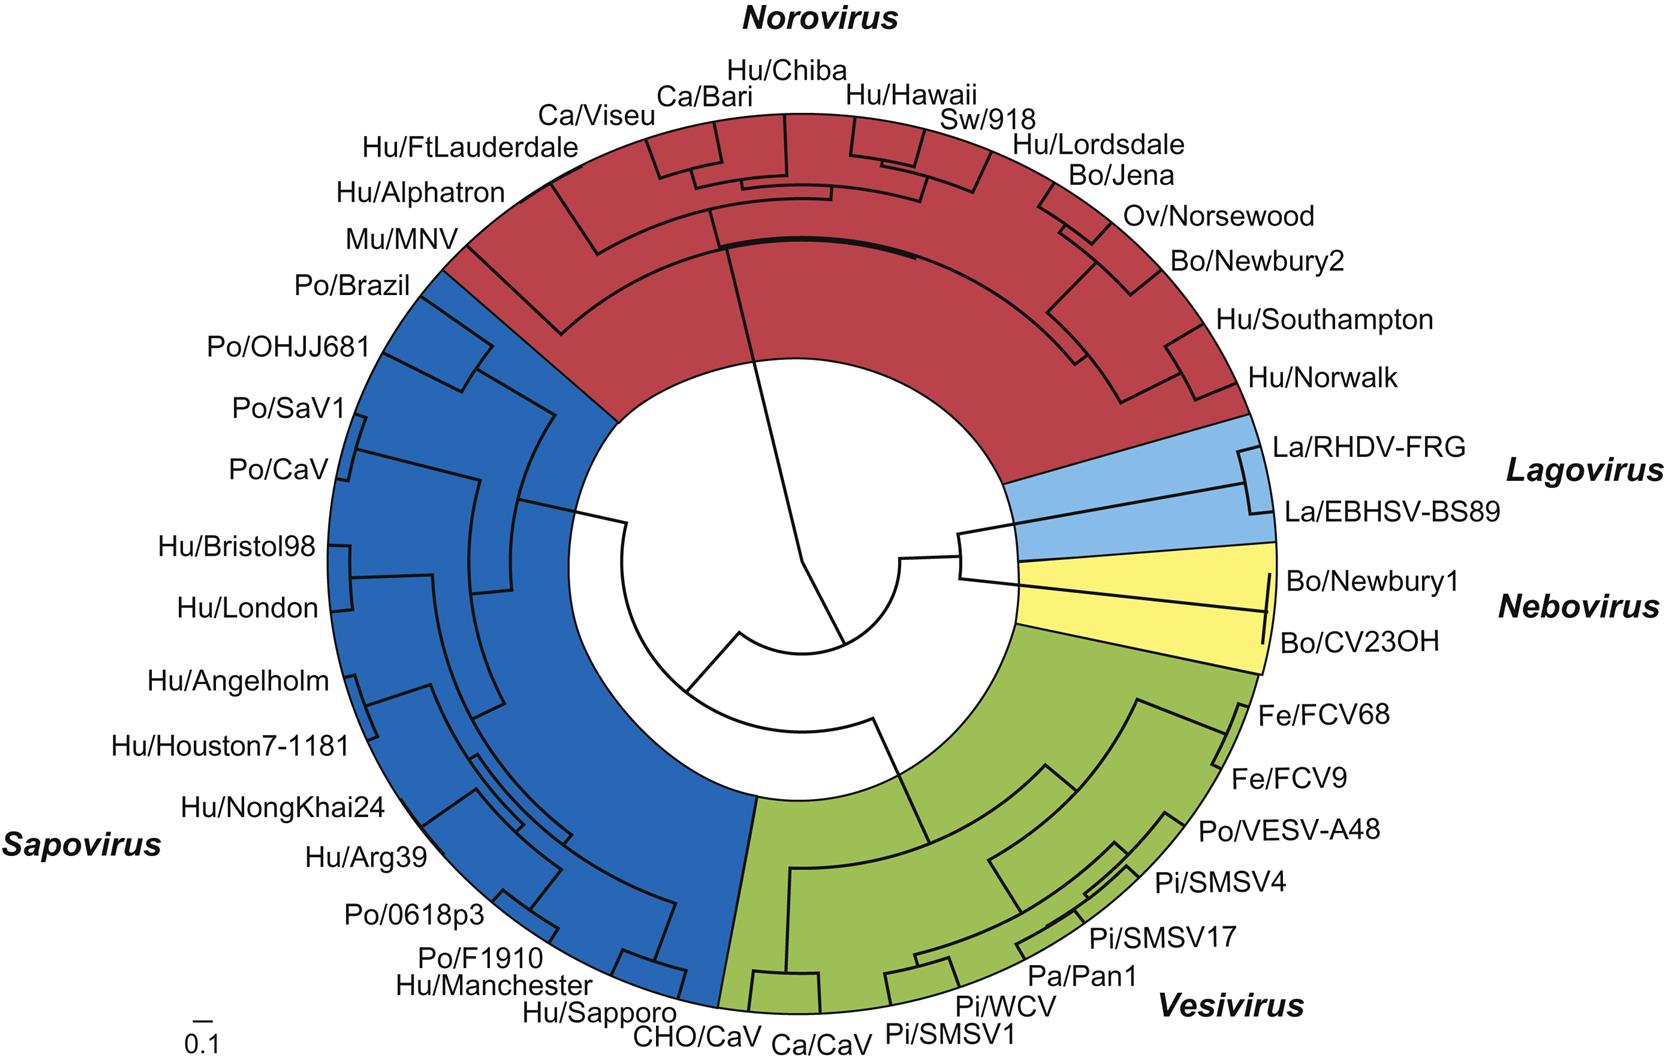 Phylogenetic relationships in the family Caliciviridae.